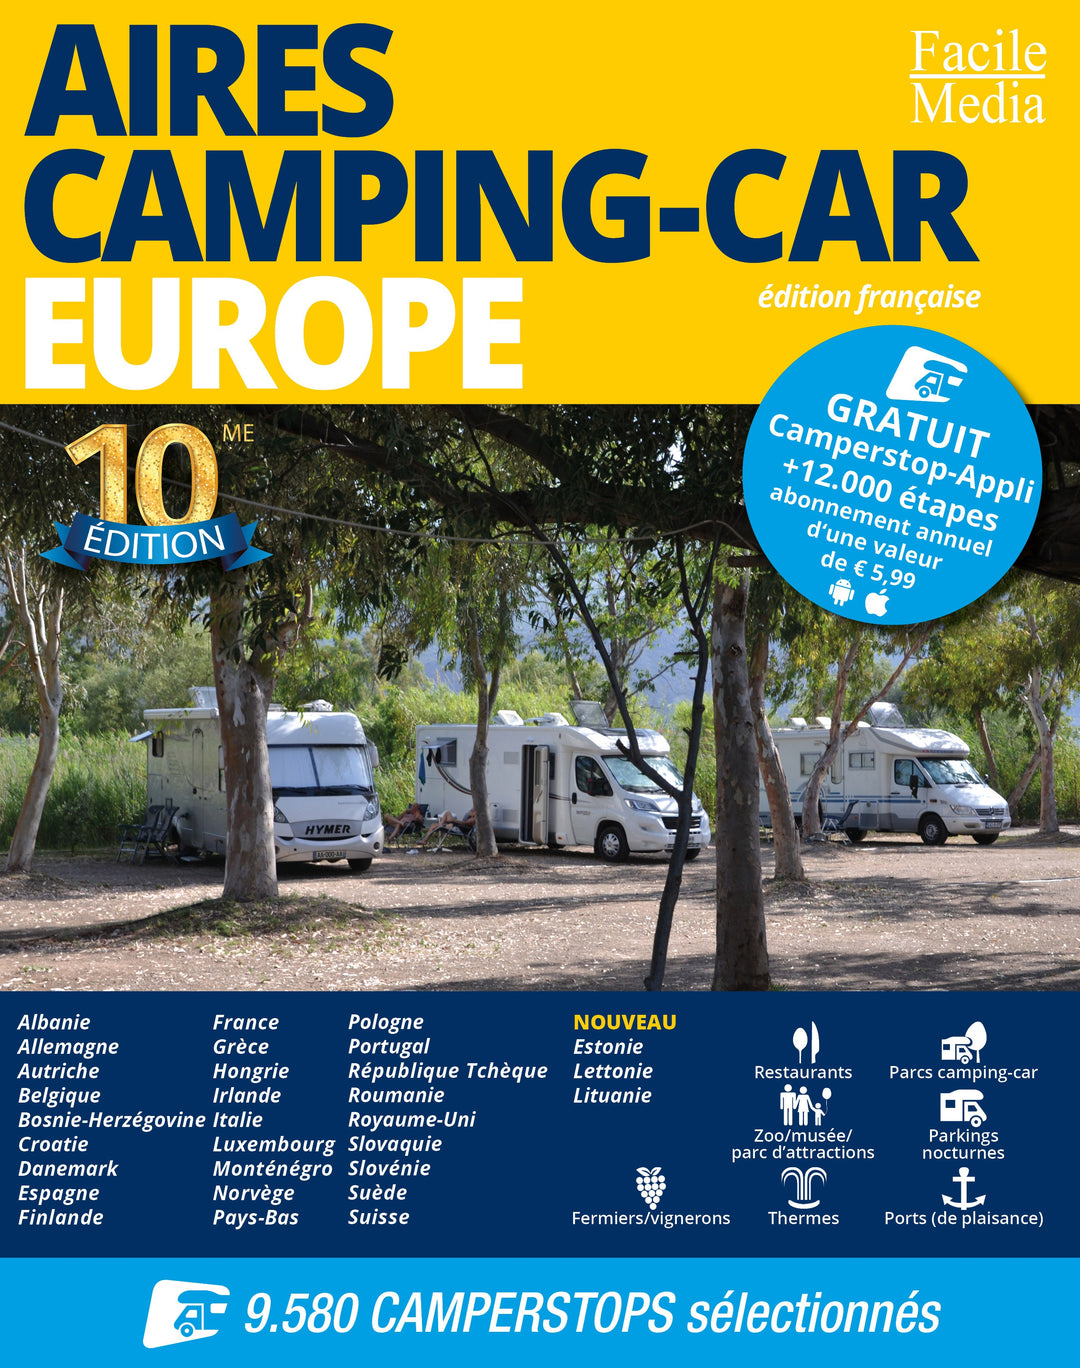 Guide Camperstop 2022 - Aires de camping-car en Europe | Facile Media guide pratique Facile Media 